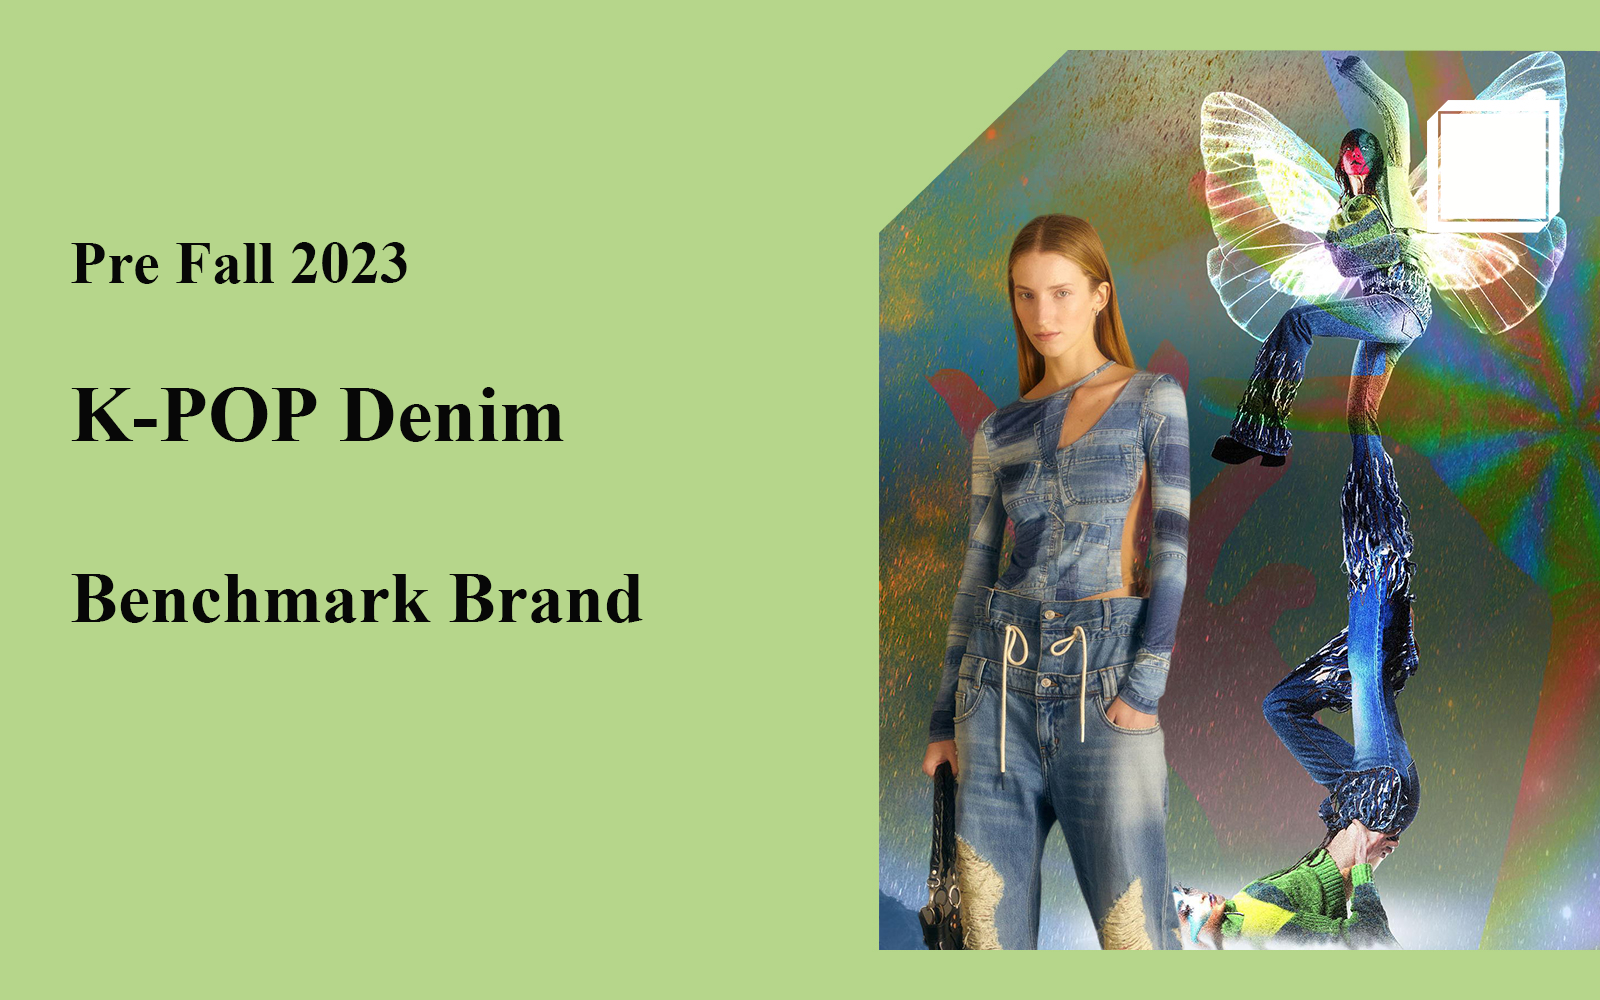 K-POP Denim -- The Comprehensive Analysis of Benchmark Denim Brand